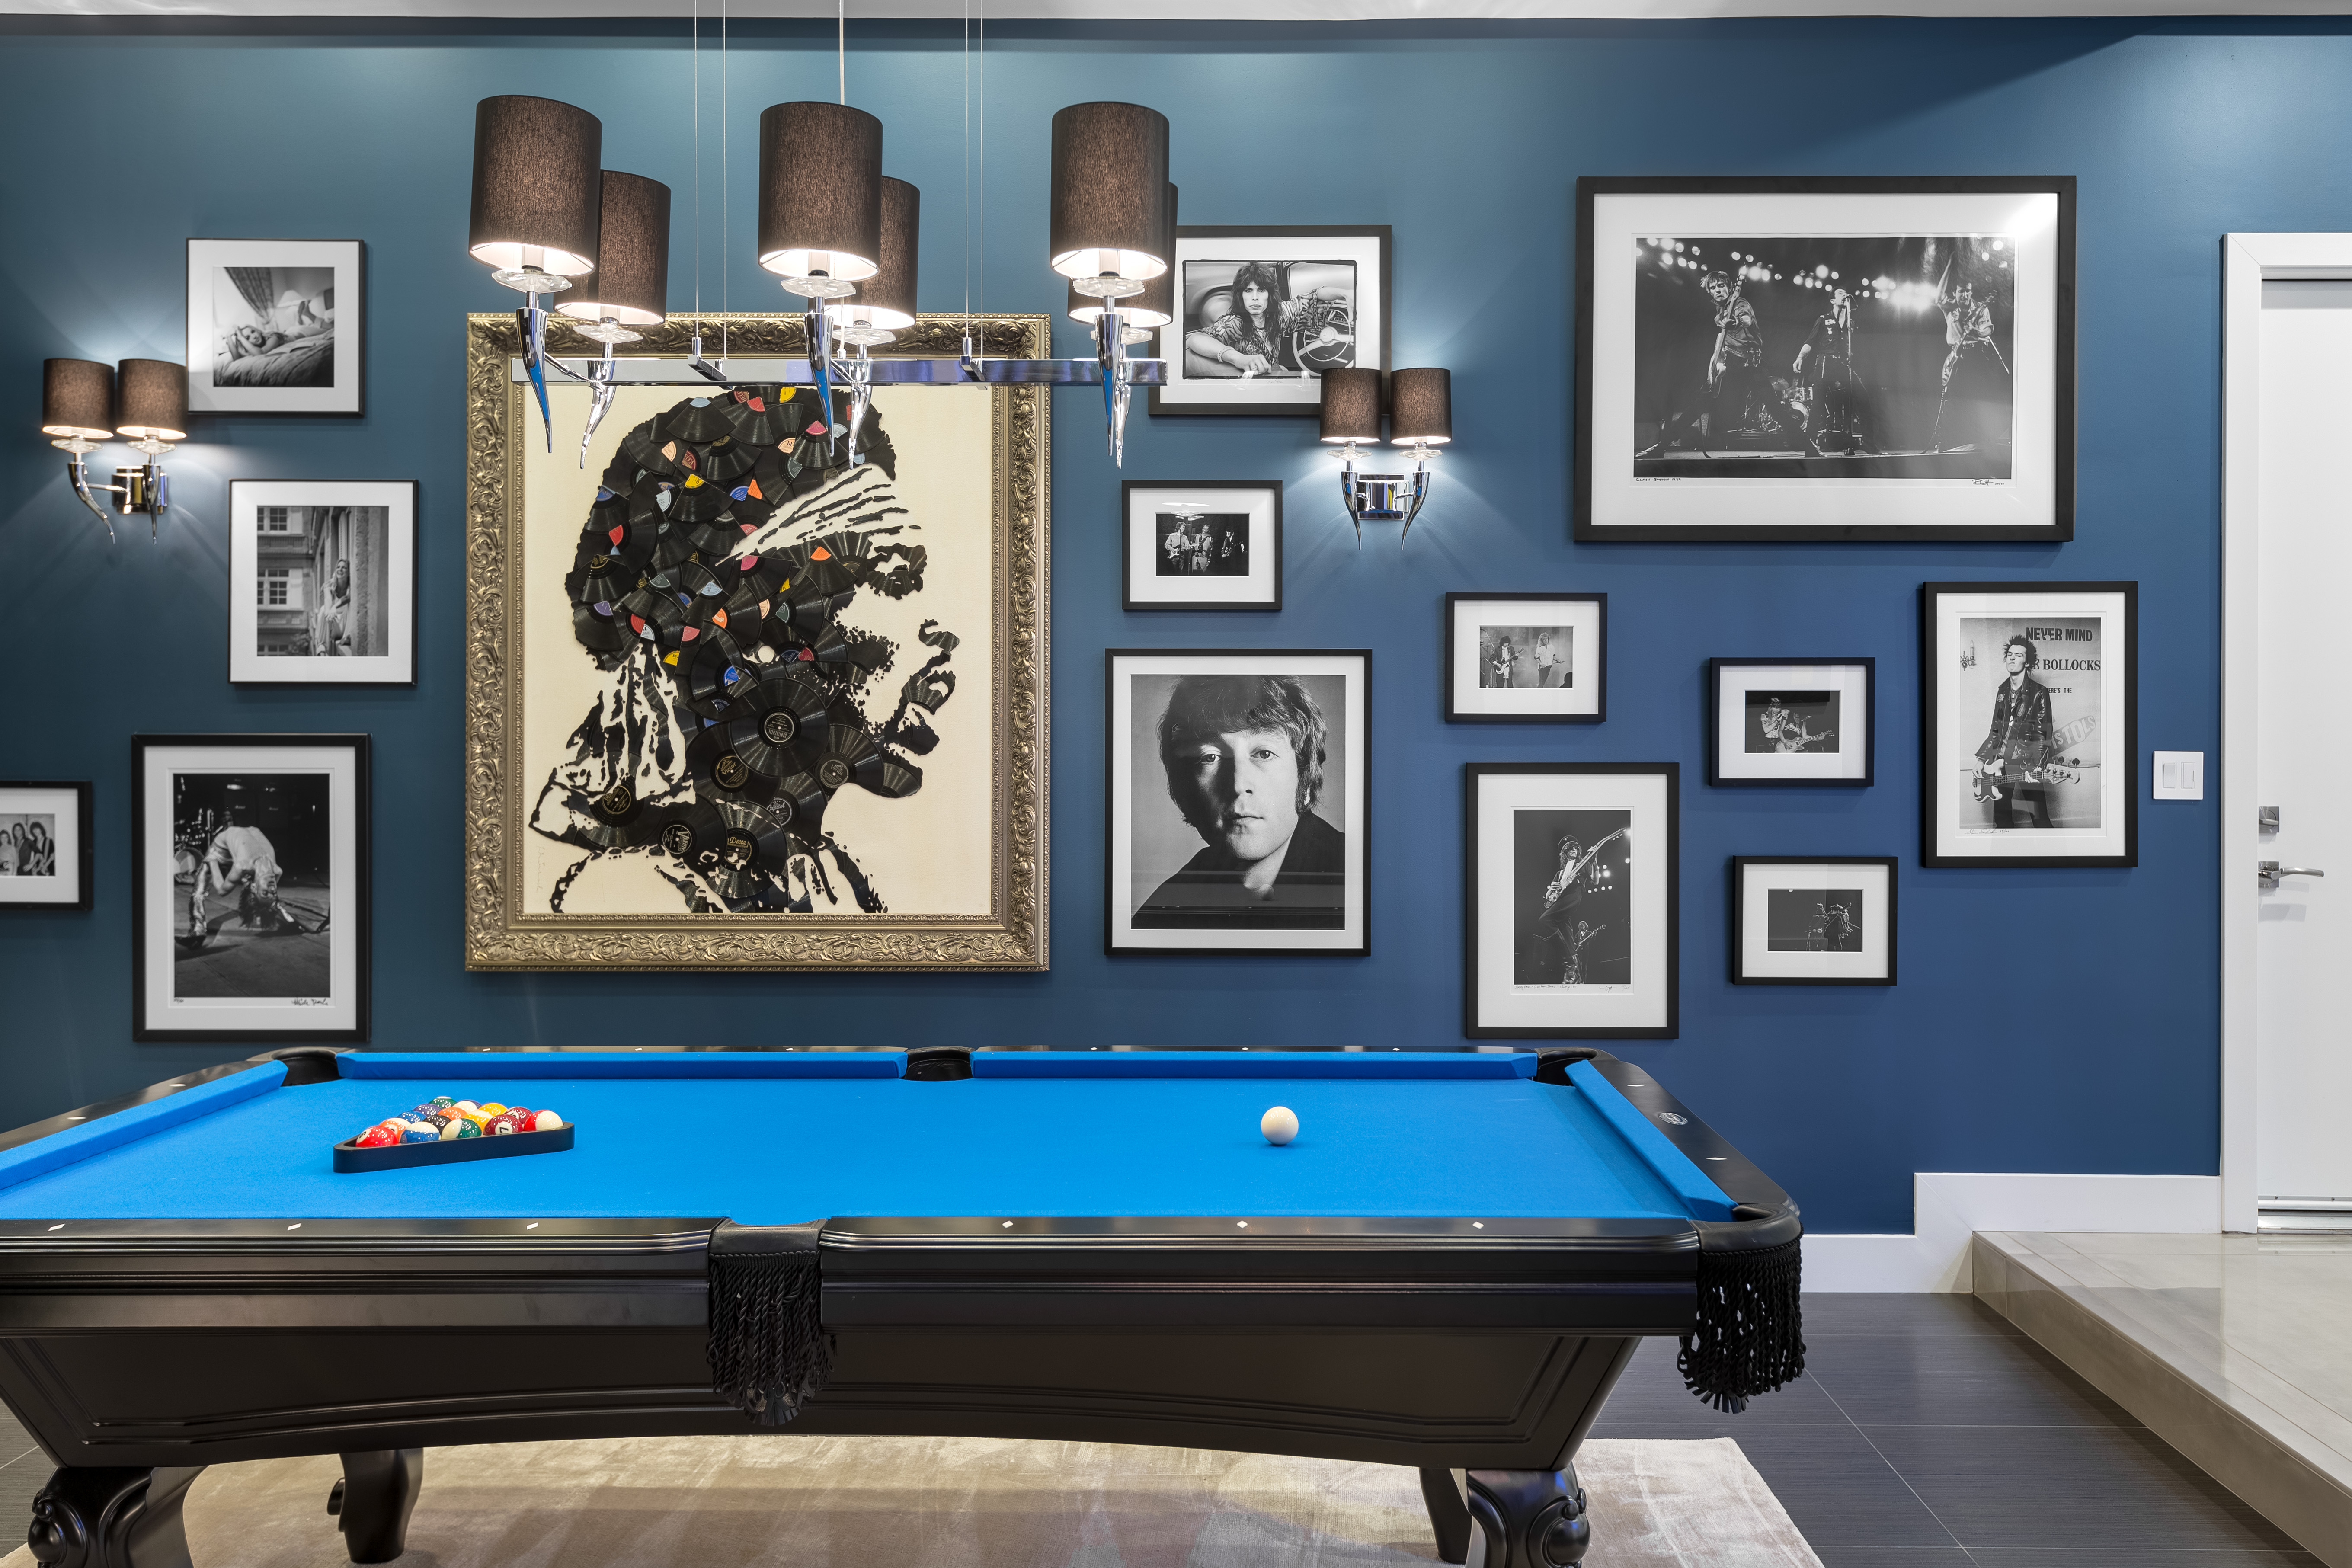 Residential Interior Design 2018 – Billiards Room